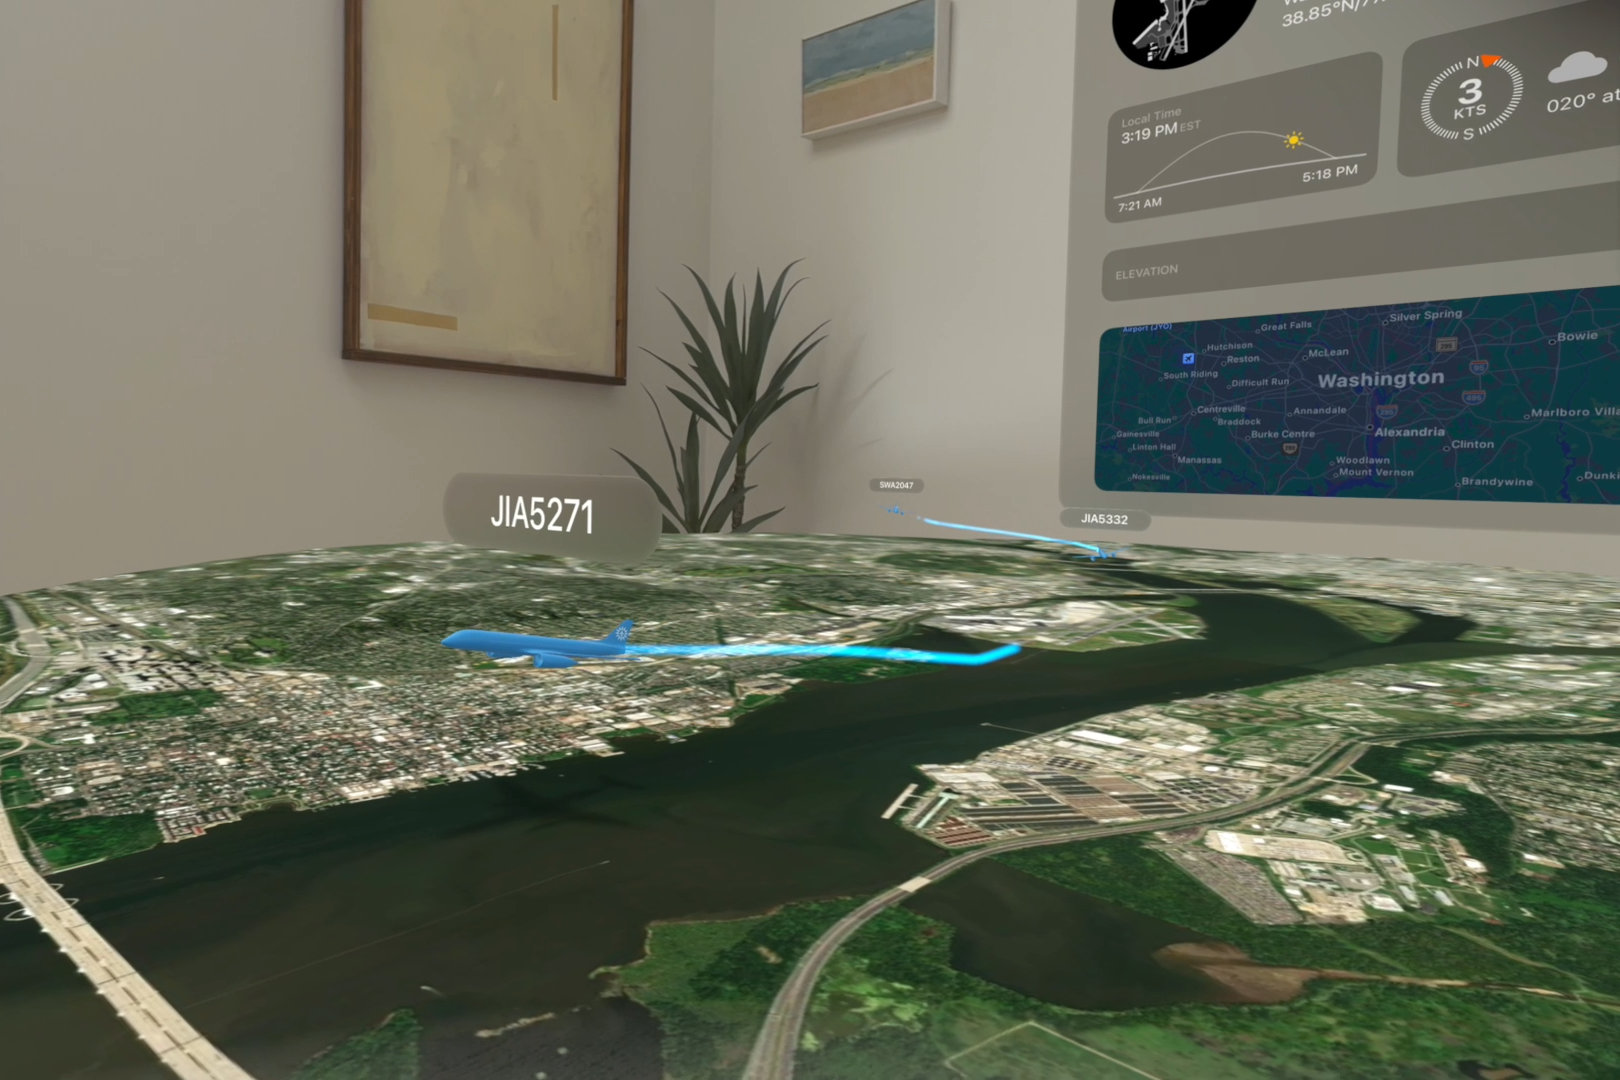 Vision Pro's Voyager به شما امکان می دهد فرودگاه ها را به صورت سه بعدی در زمان واقعی مشاهده کنید.